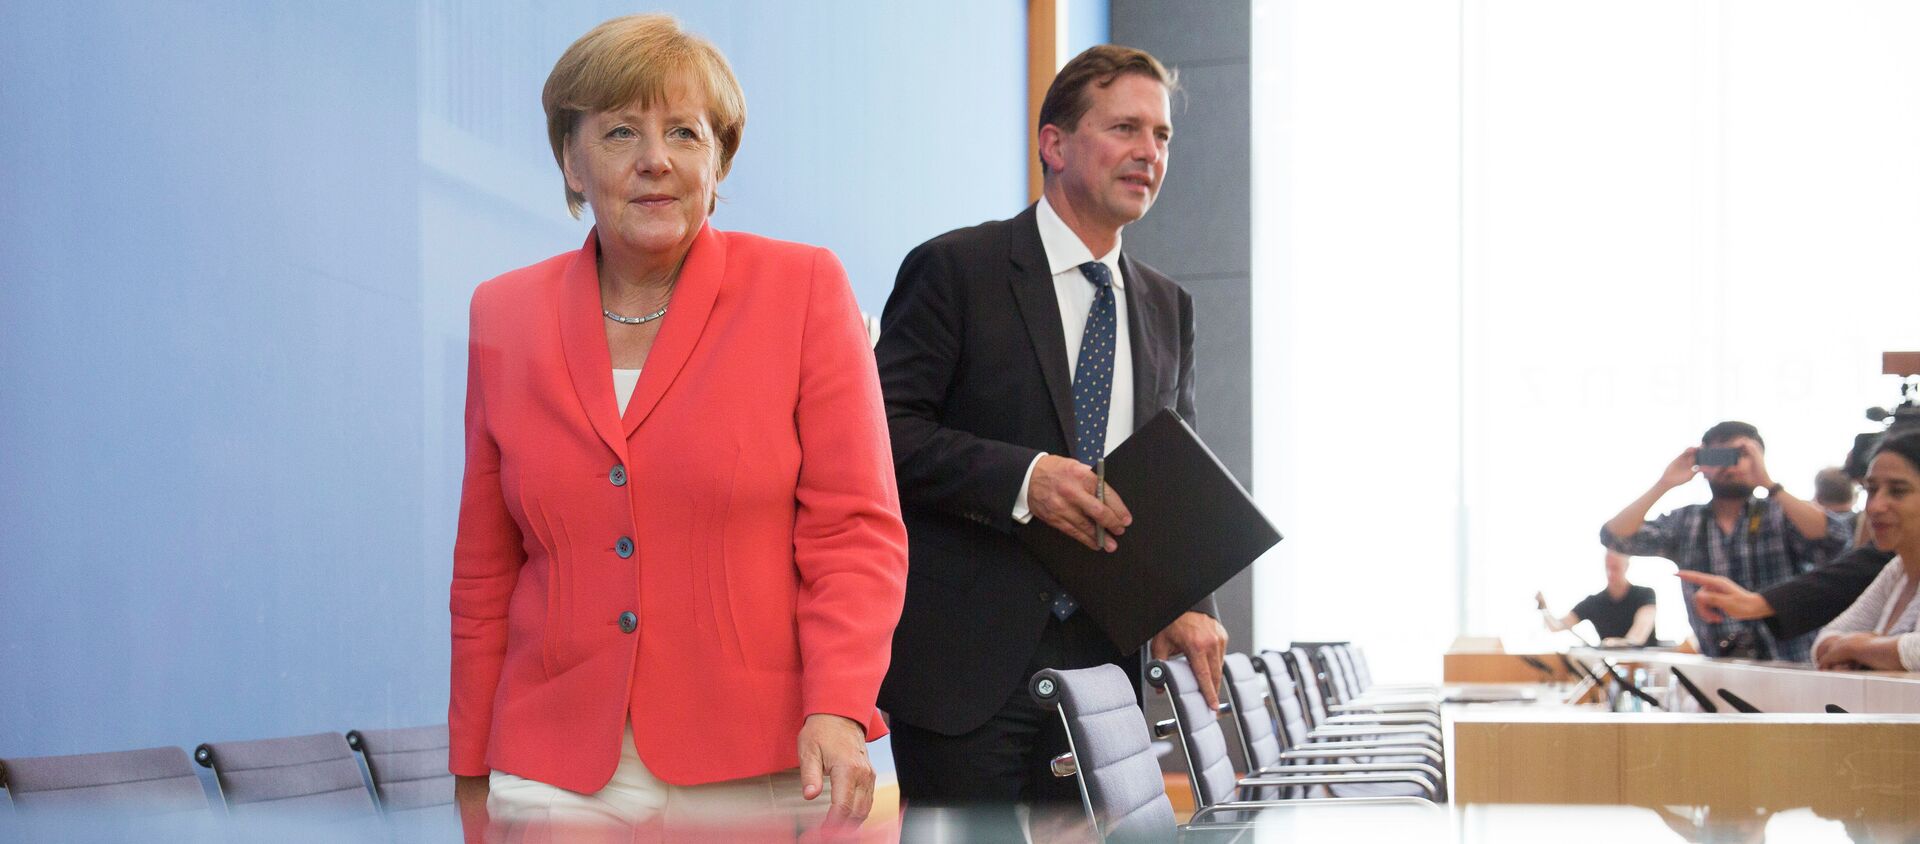 German Chancellor Angela Merkel, left, and government spokesman Steffen Seibert leave after Merkel's annual summer news conference in Berlin, Germany, Monday, Aug. 31, 2015 - Sputnik Türkiye, 1920, 06.03.2017